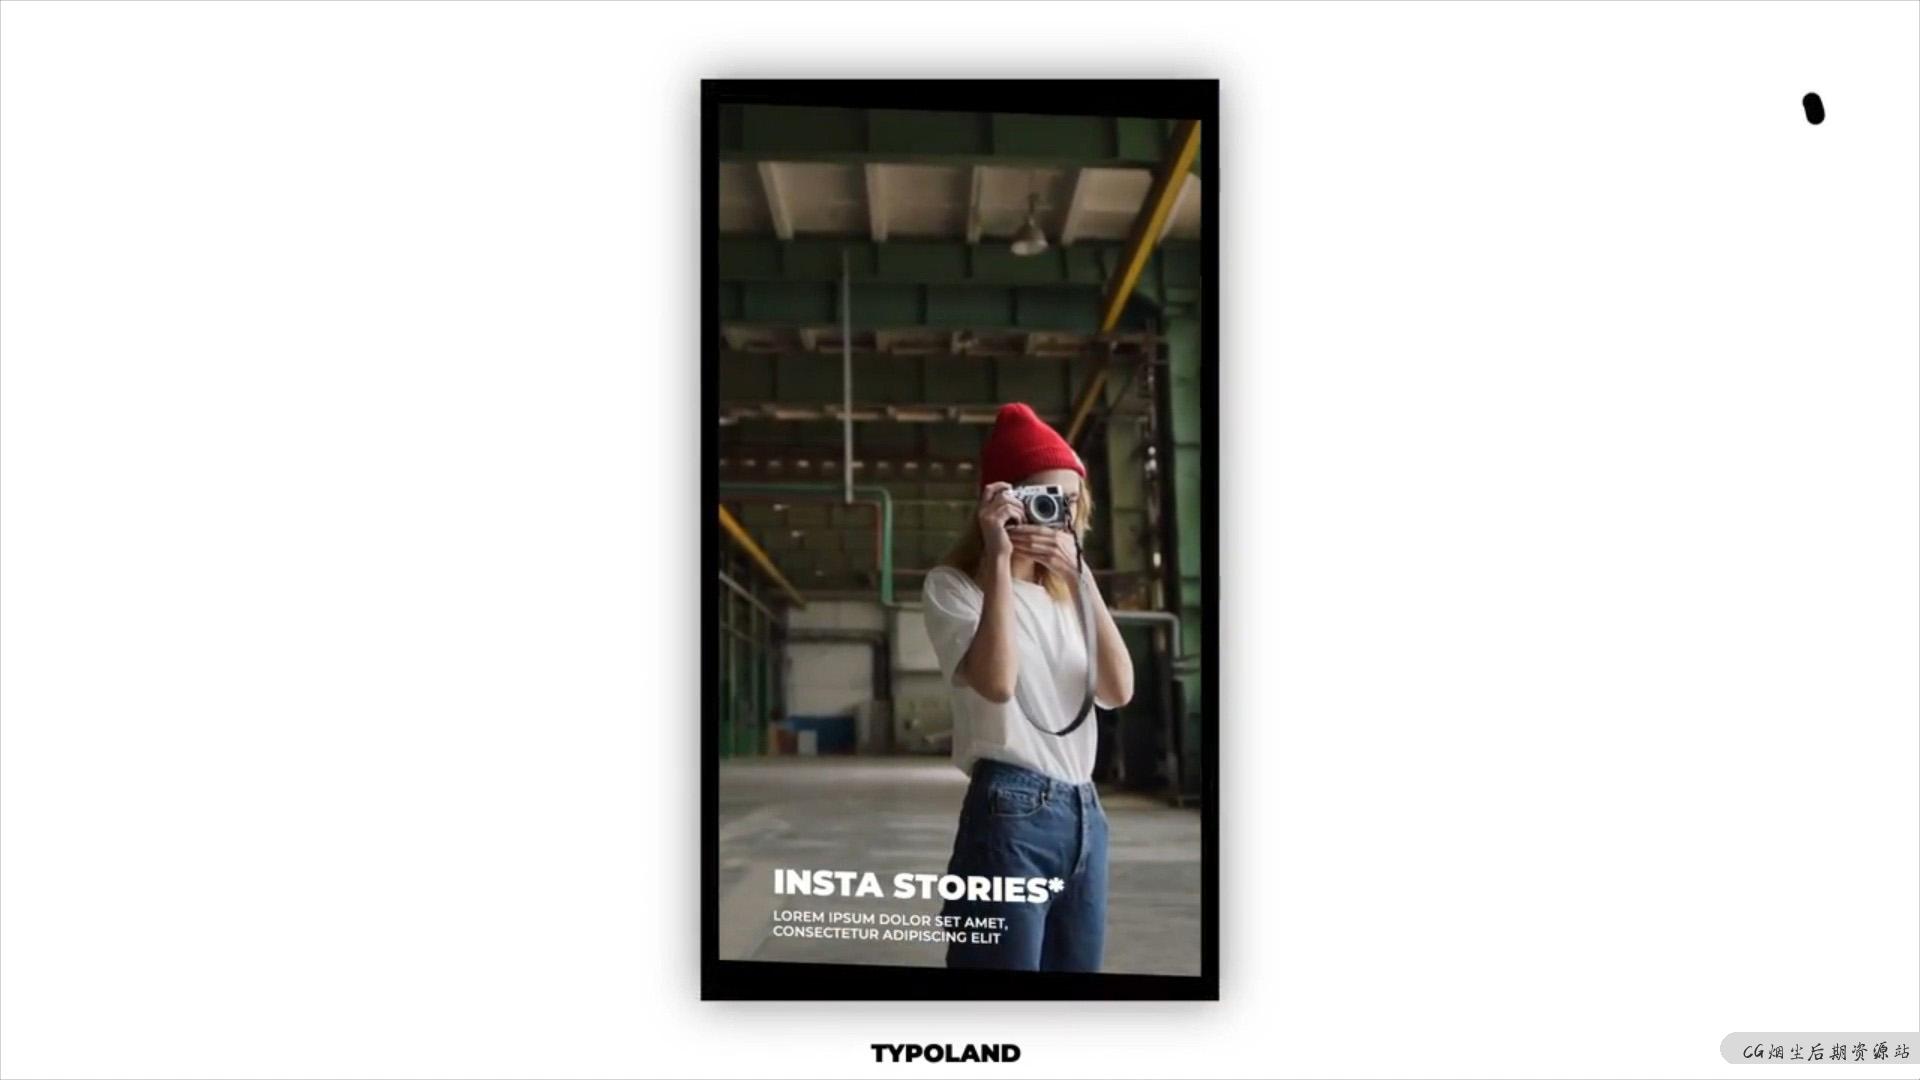 fcpx竖屏模板 6组时尚现代手机短视频片头模板 Instagram Stories